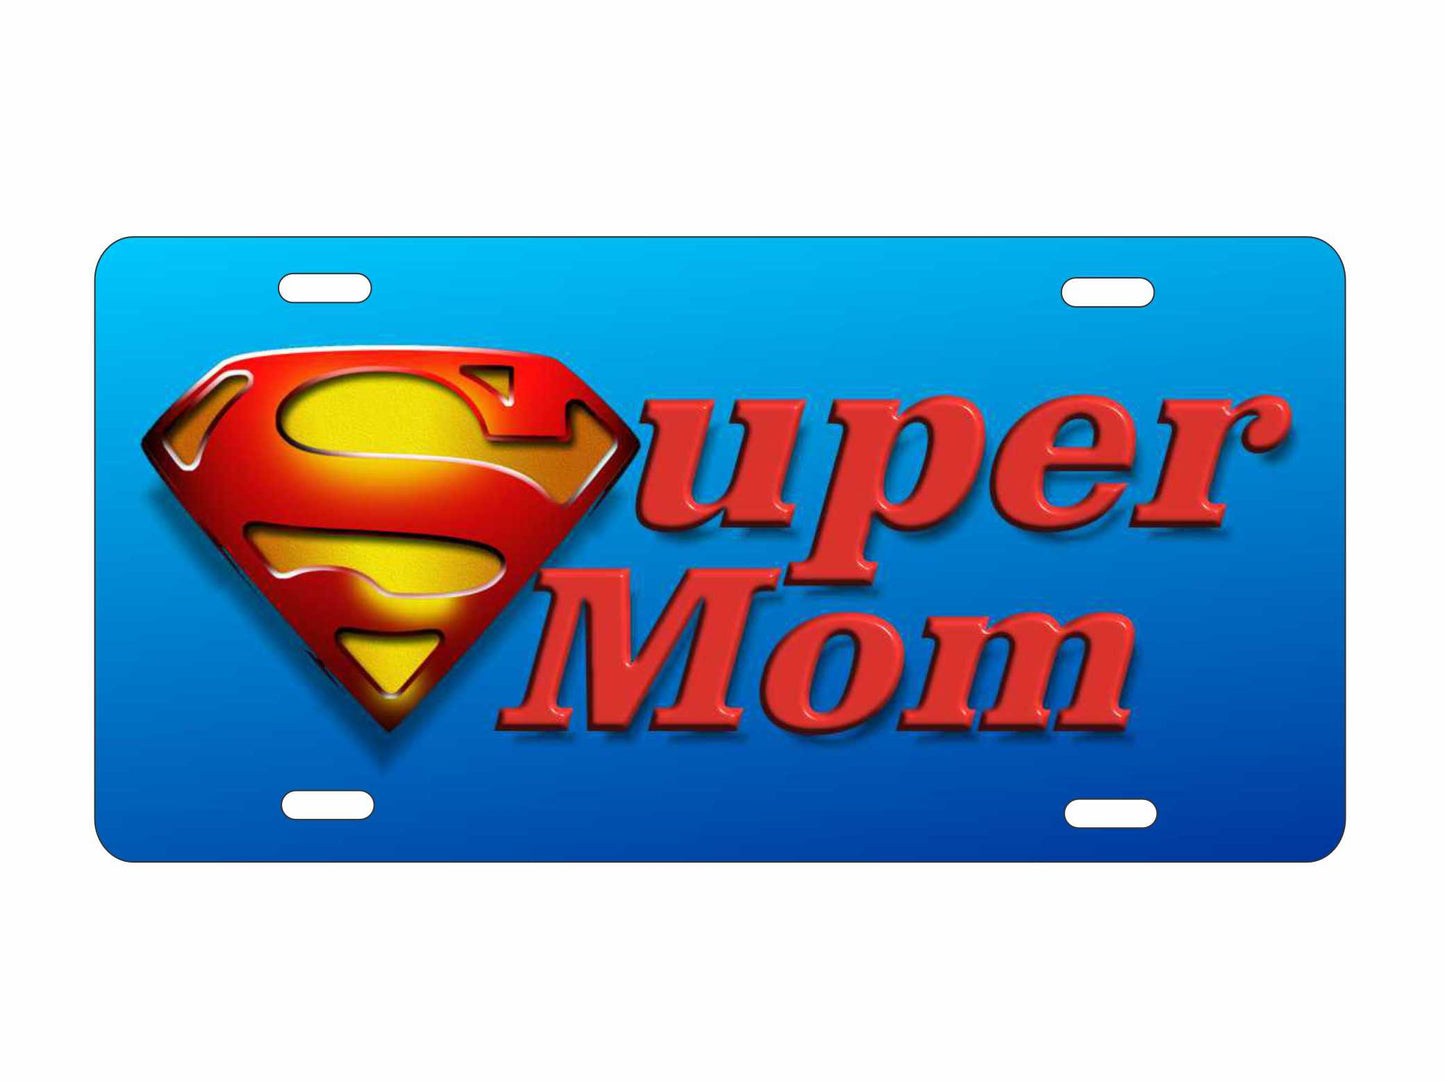 super mom novelty front license plate Decorative aluminum vanity car tag